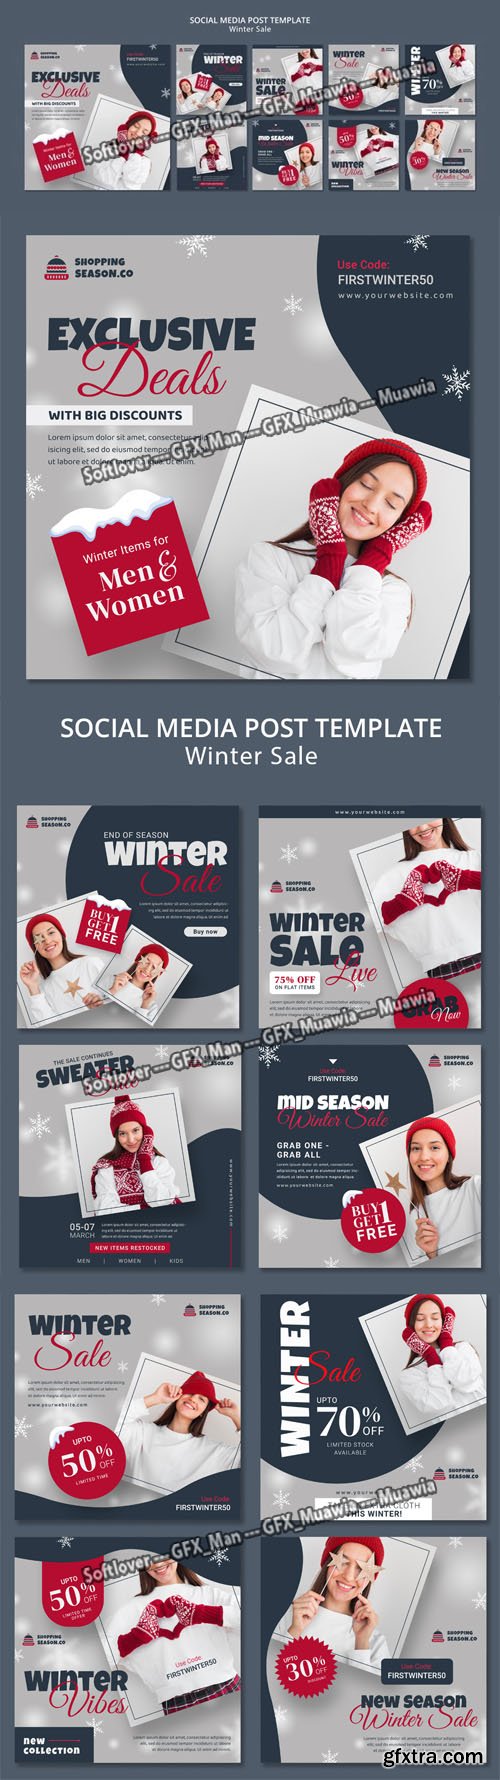 Winter Sale - Social Media Posts PSD Template